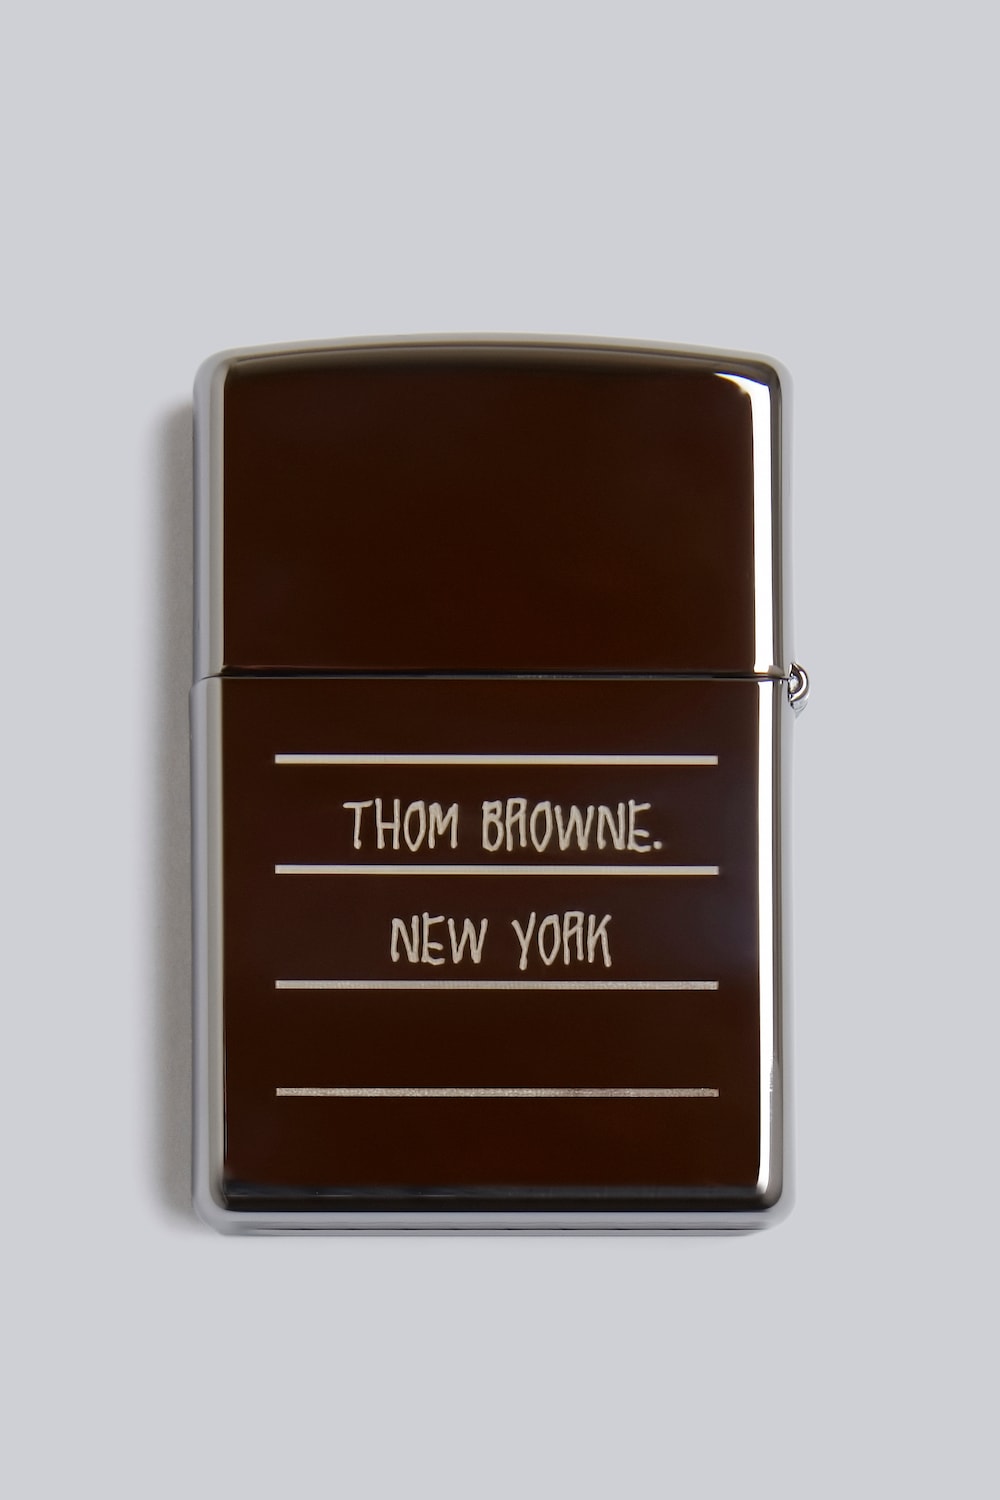 Thom Browne 正式宣佈「接管」巴黎時尚名所 colette